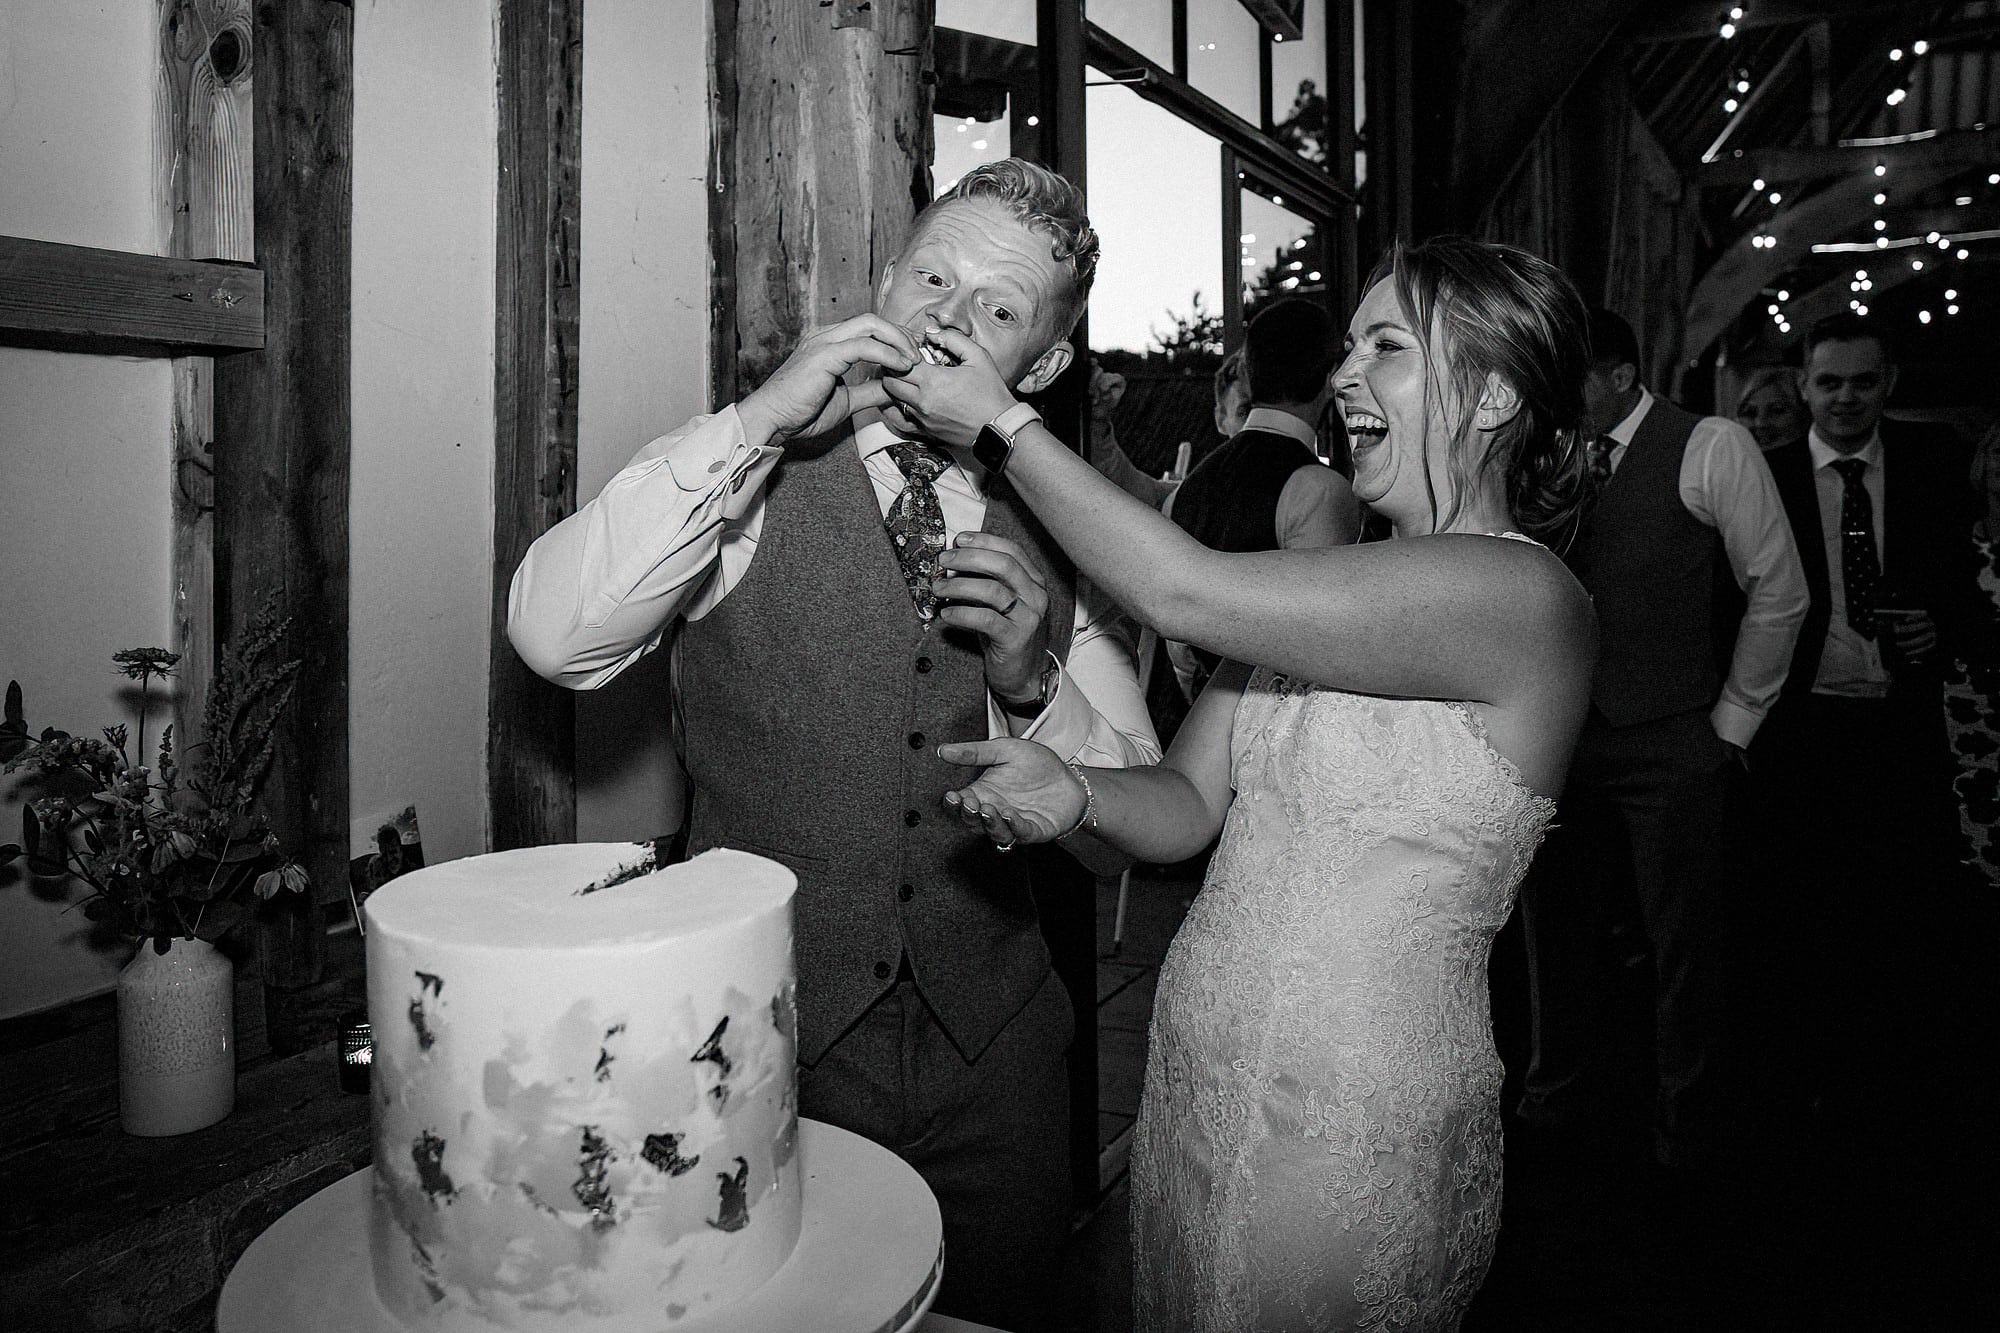 bride and groom eating wedding cake